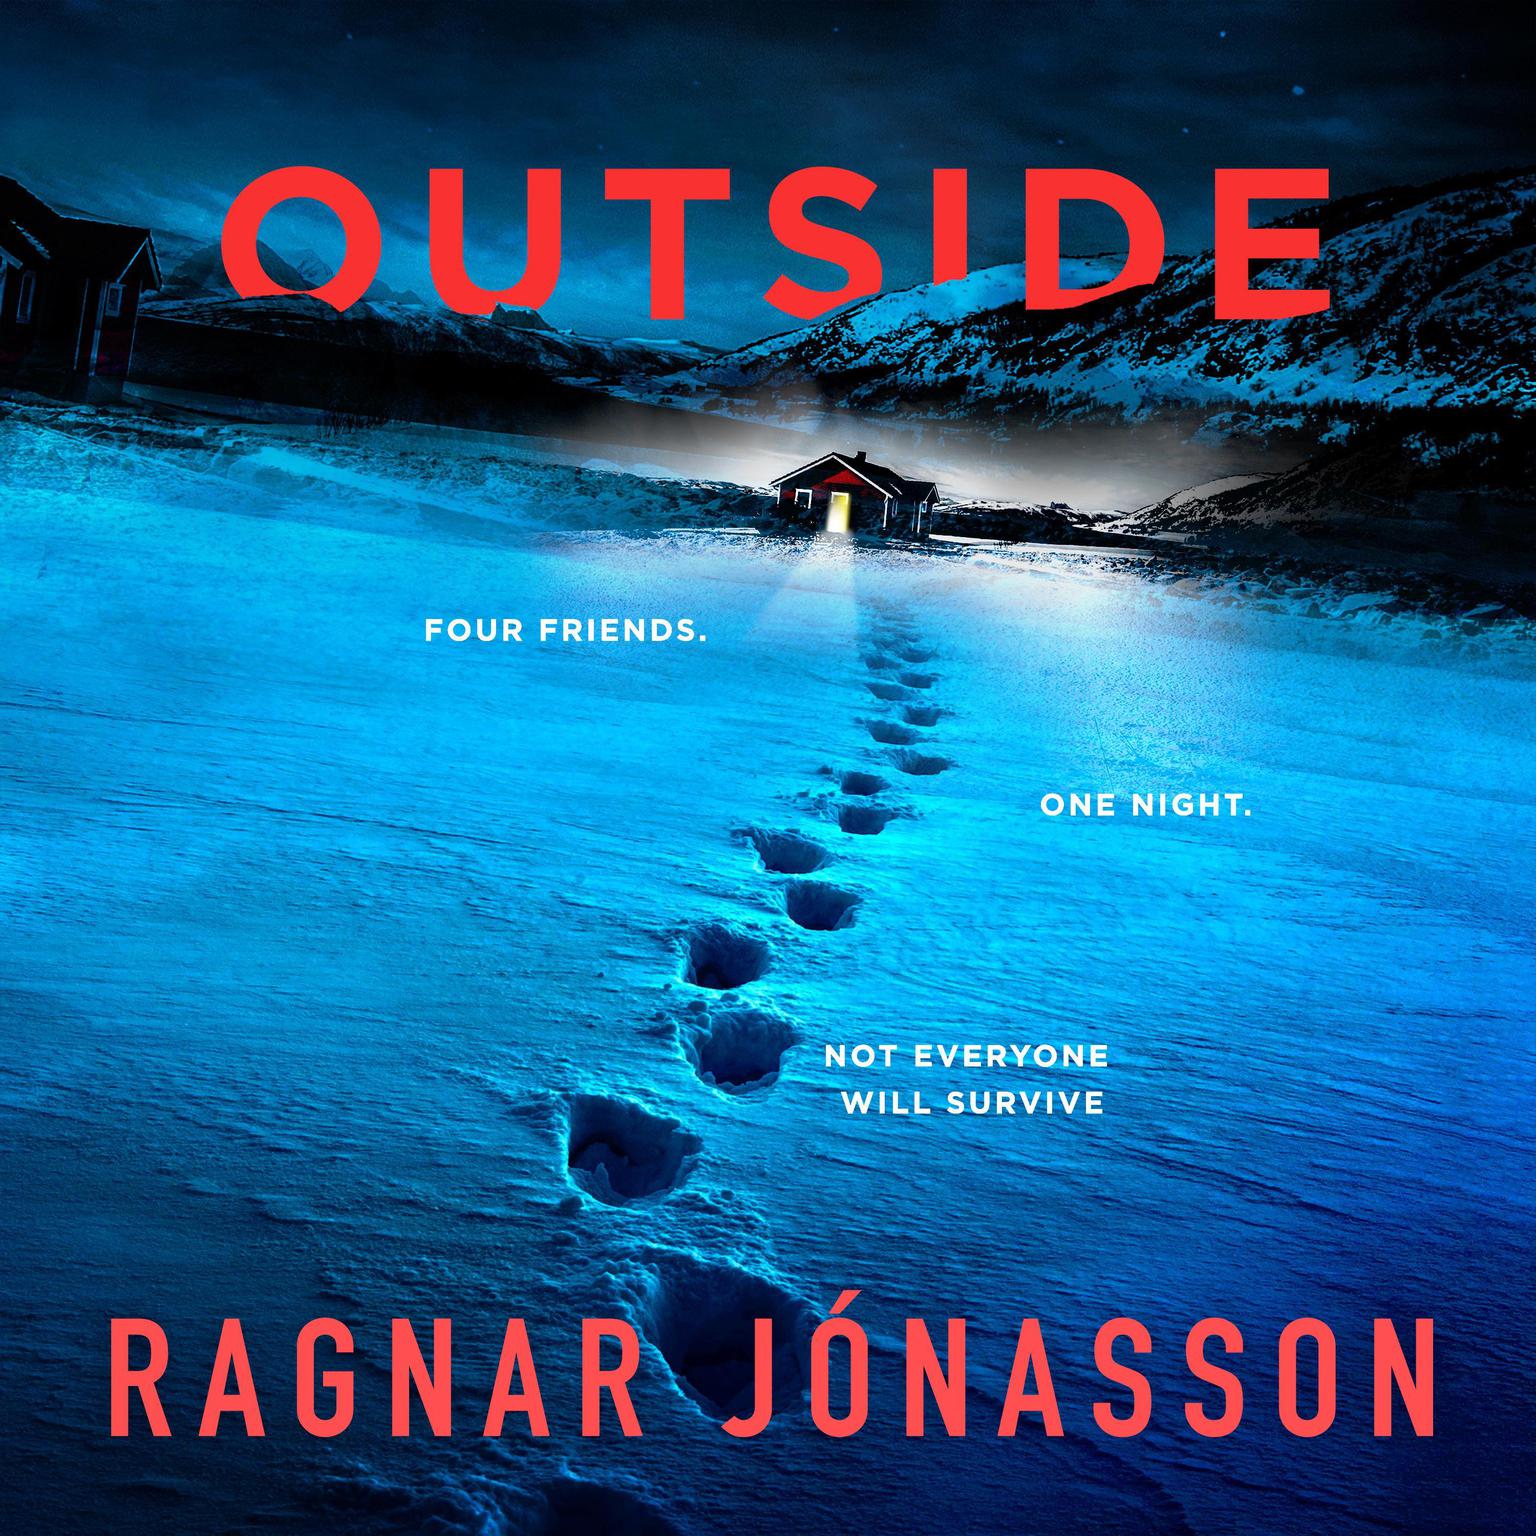 Outside Audiobook, by Ragnar Jónasson